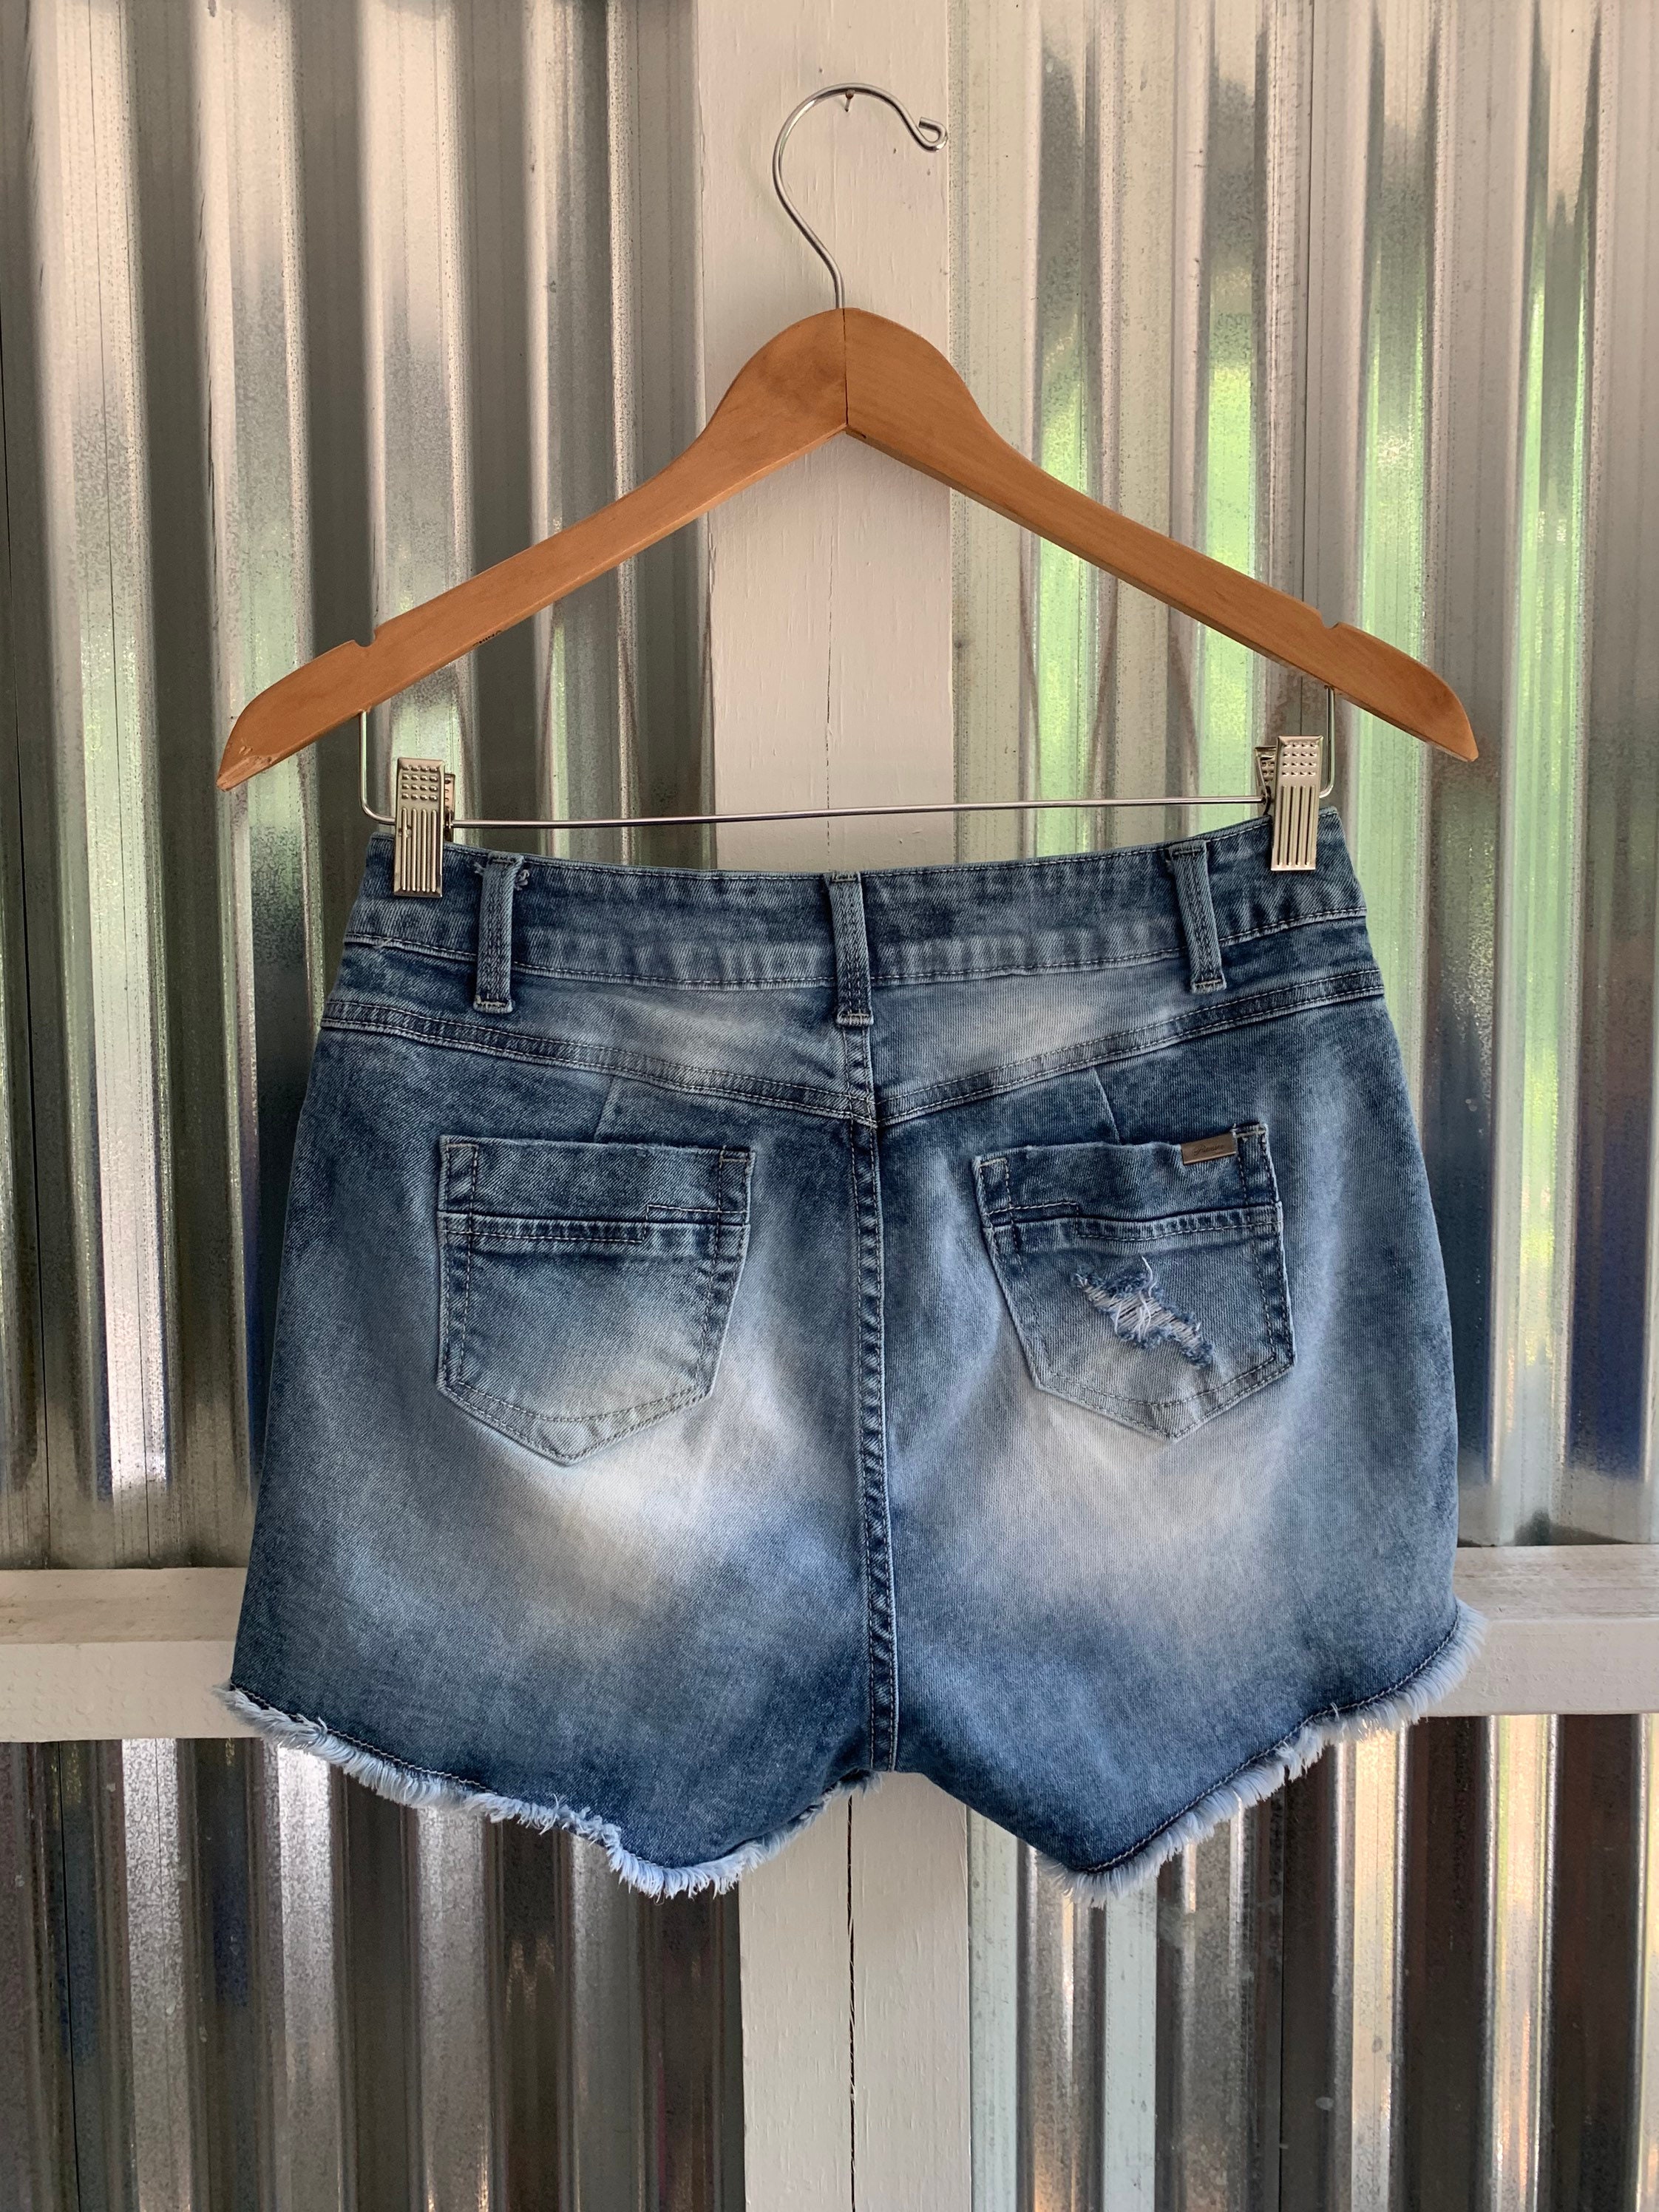 OULIU-Women High Waist Fringe Ripped Destroyed Denim Shorts Jeans